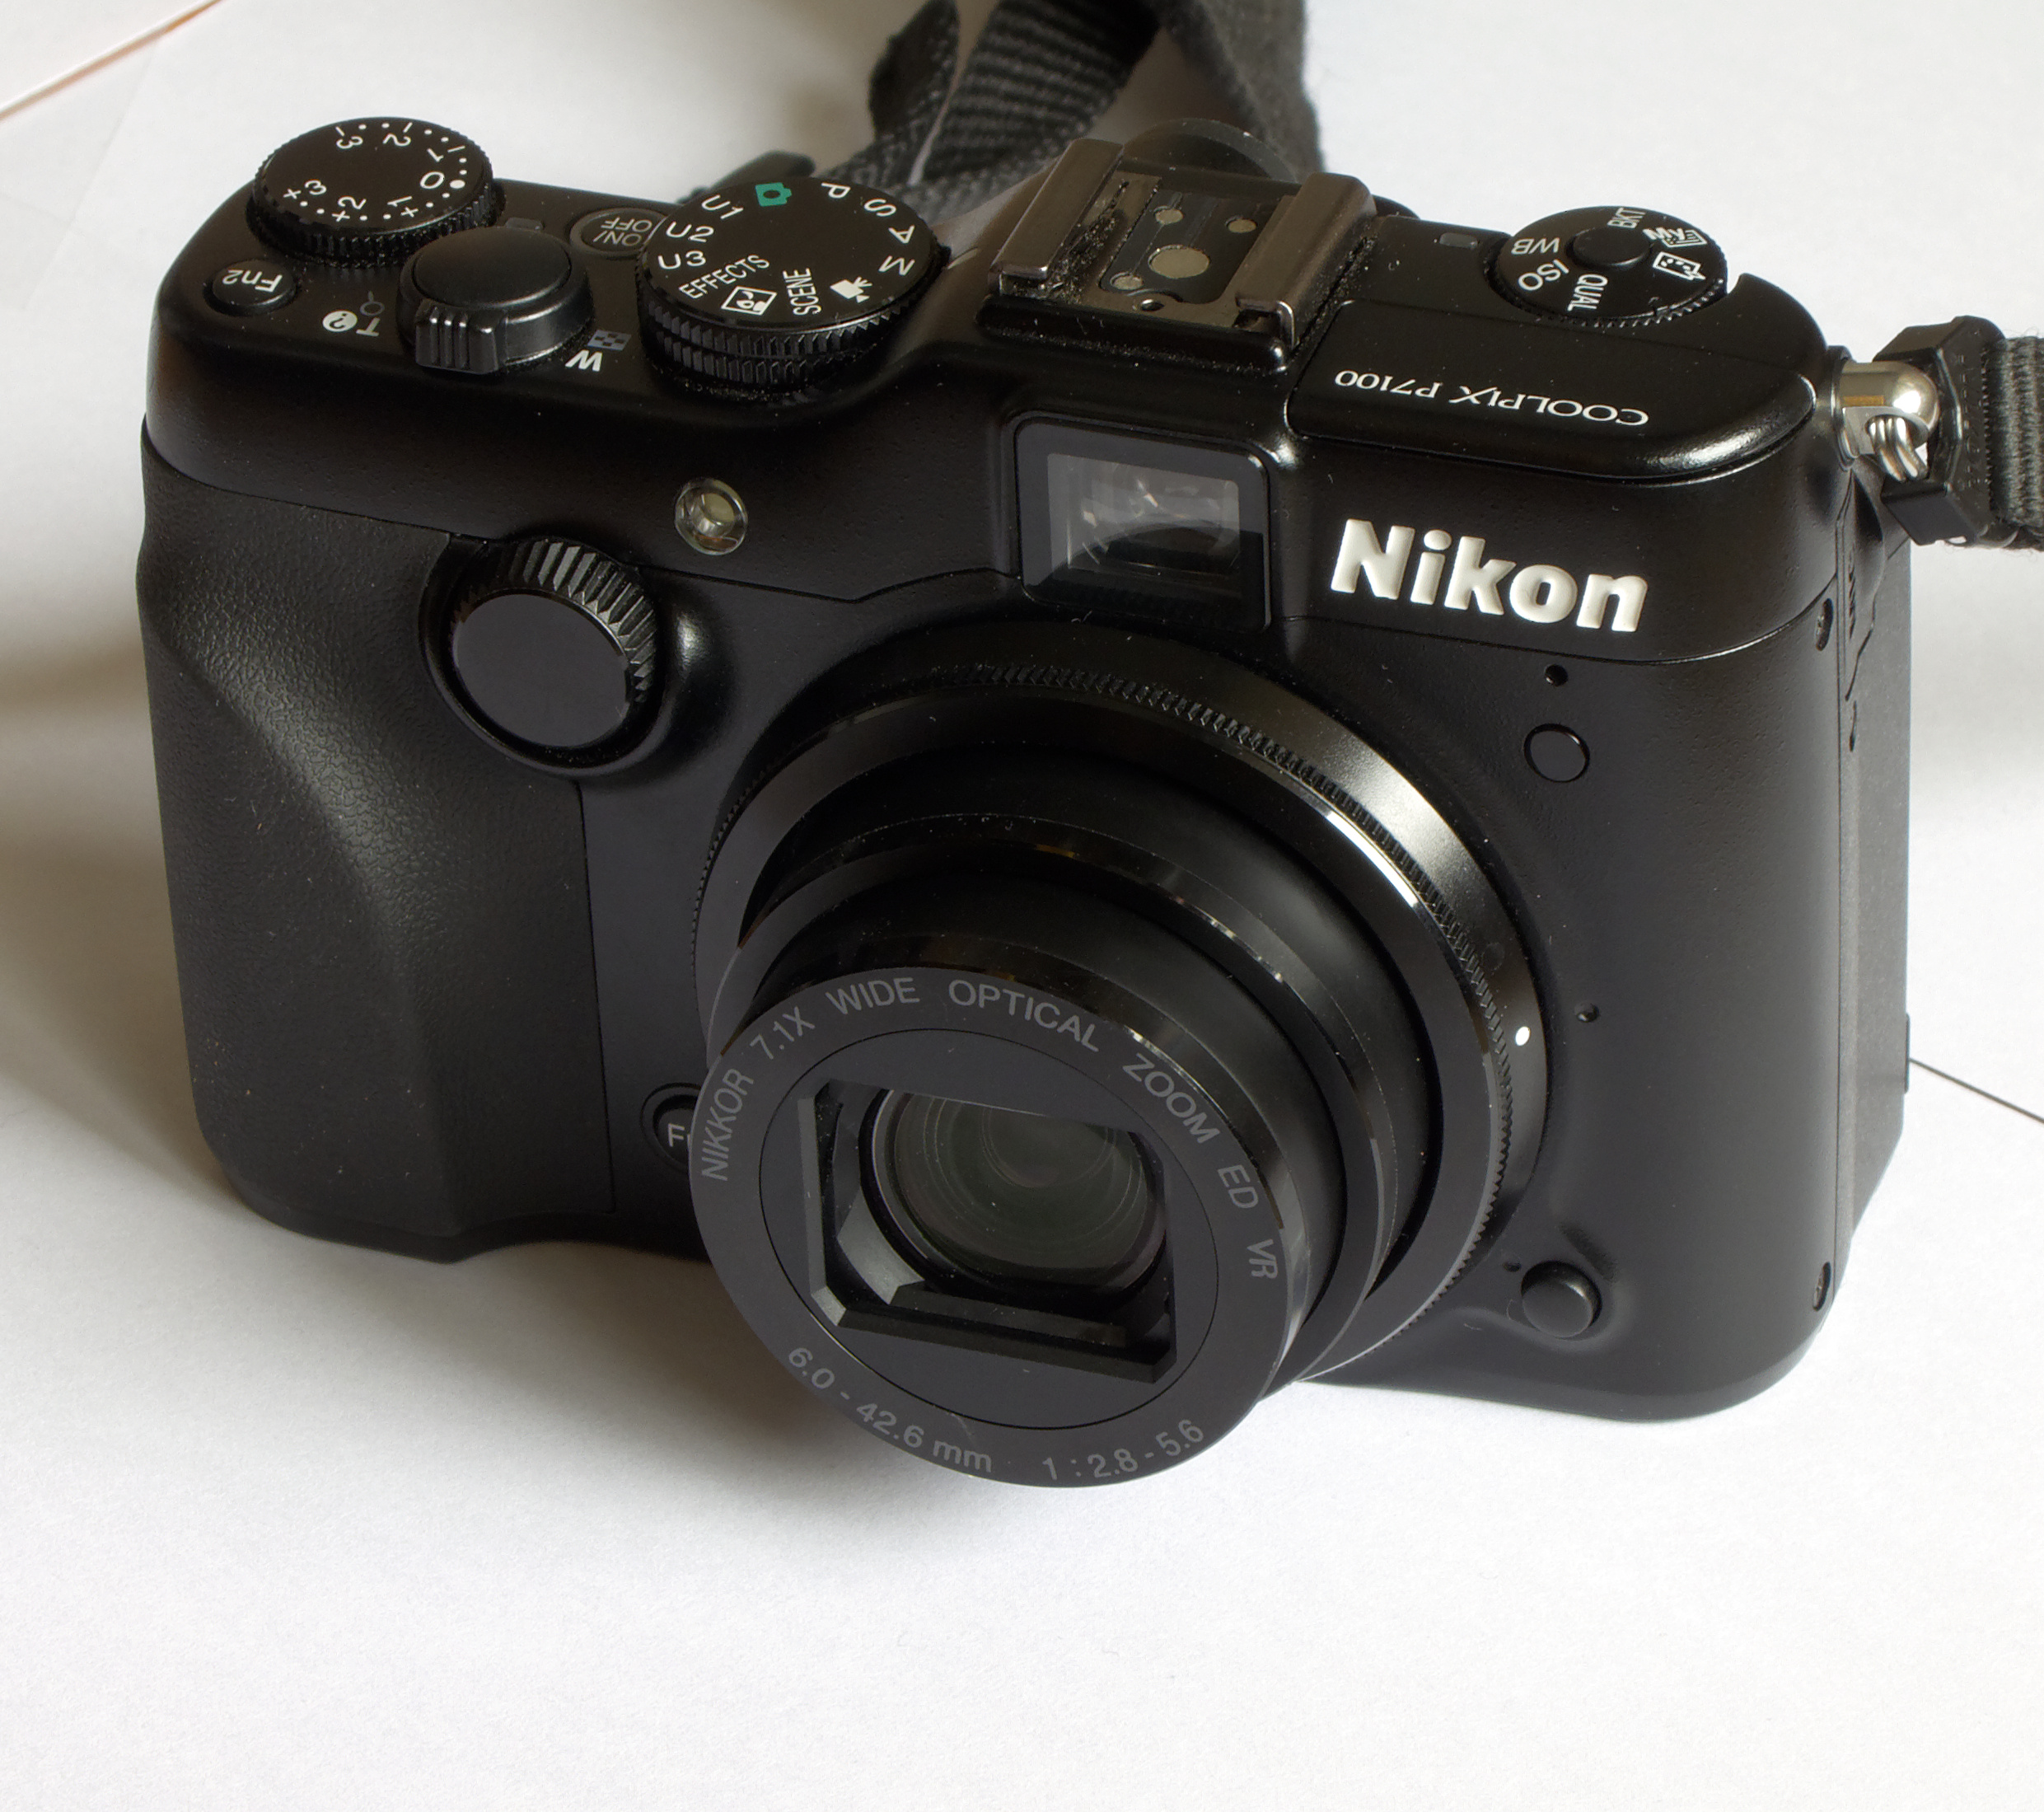 Nikon Coolpix P7100 - Wikipedia